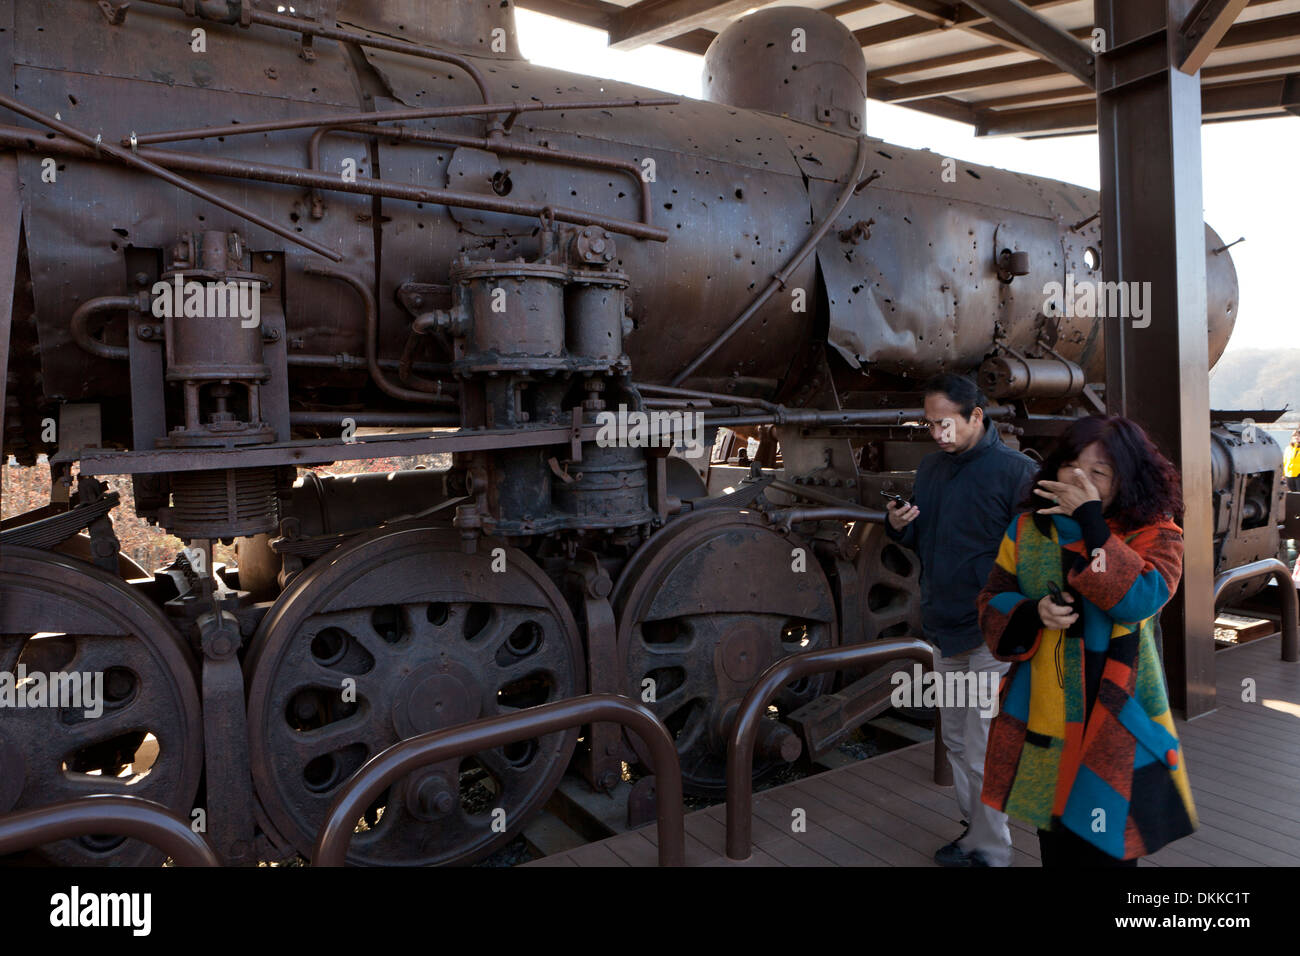 Gyeonggui steam train destroyed during the Korean War, displayed at Imjingak - DMZ, South Korea Stock Photo